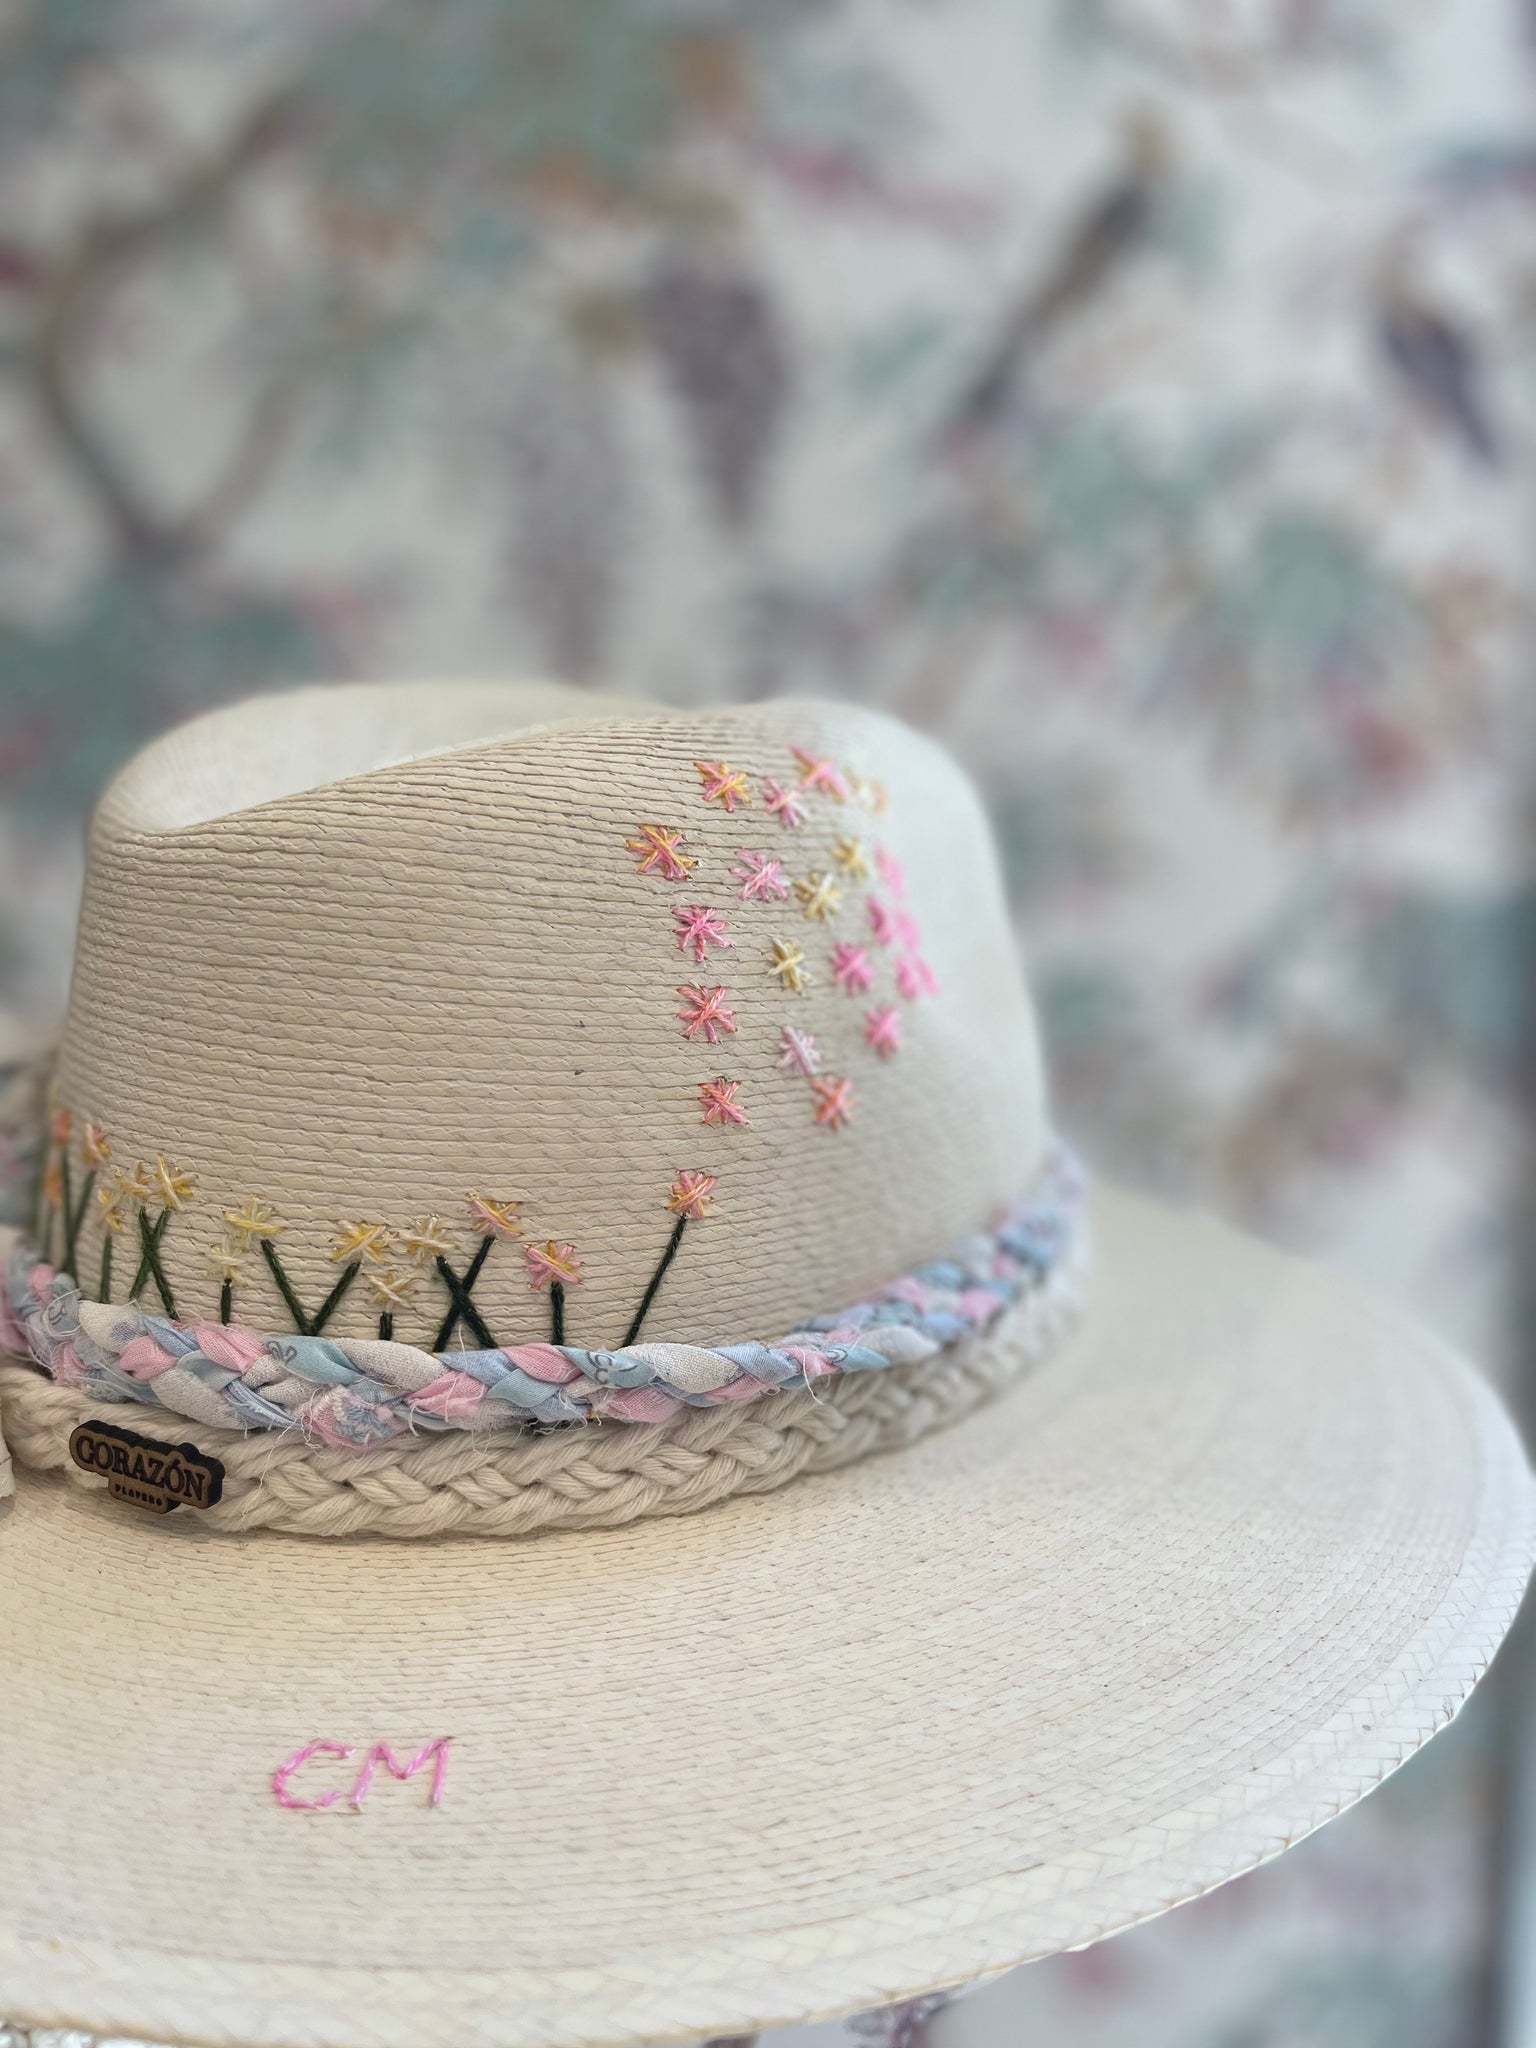 Exclusive Stella Hat by Corazon Playero - Preorder